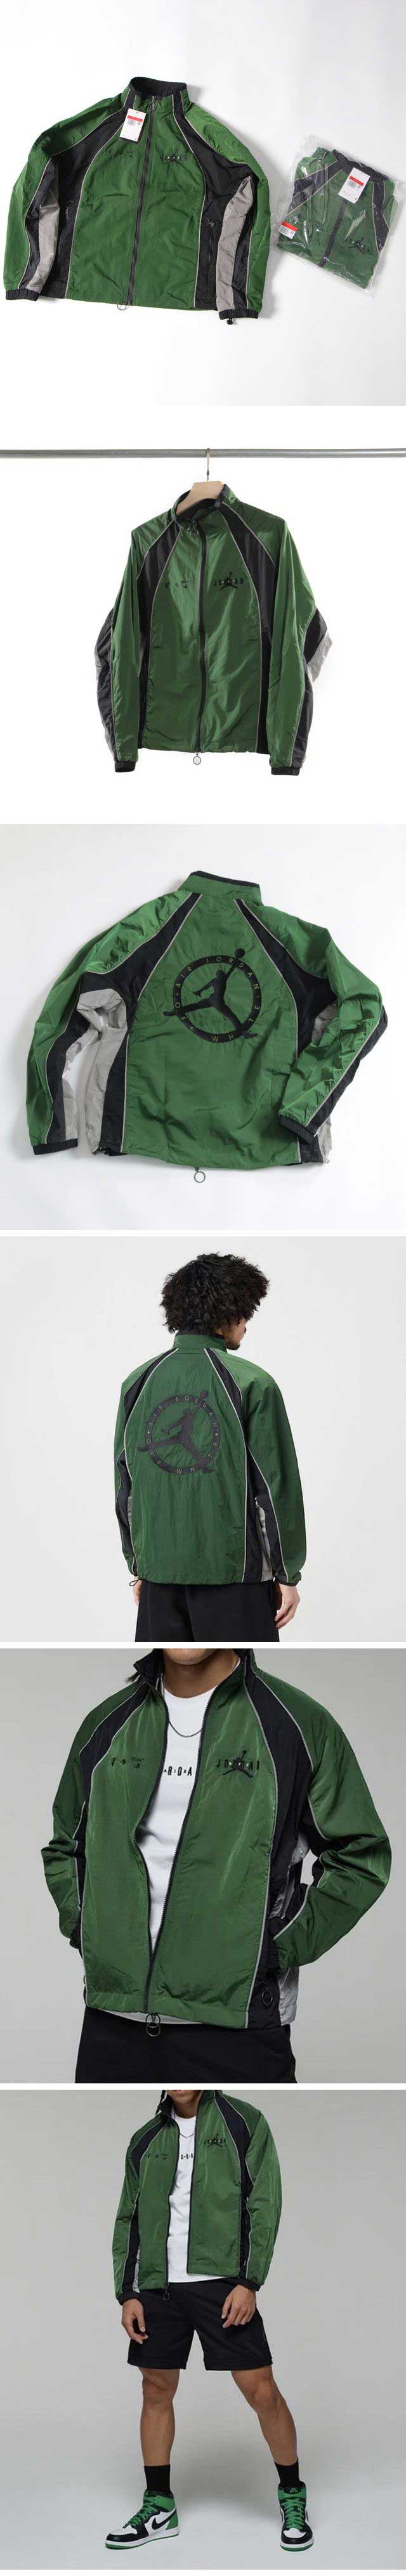 Off-White x Jordan Collaboration Green Jacket オフホワイト x ジョーダン コラボ グリーン ジャケット